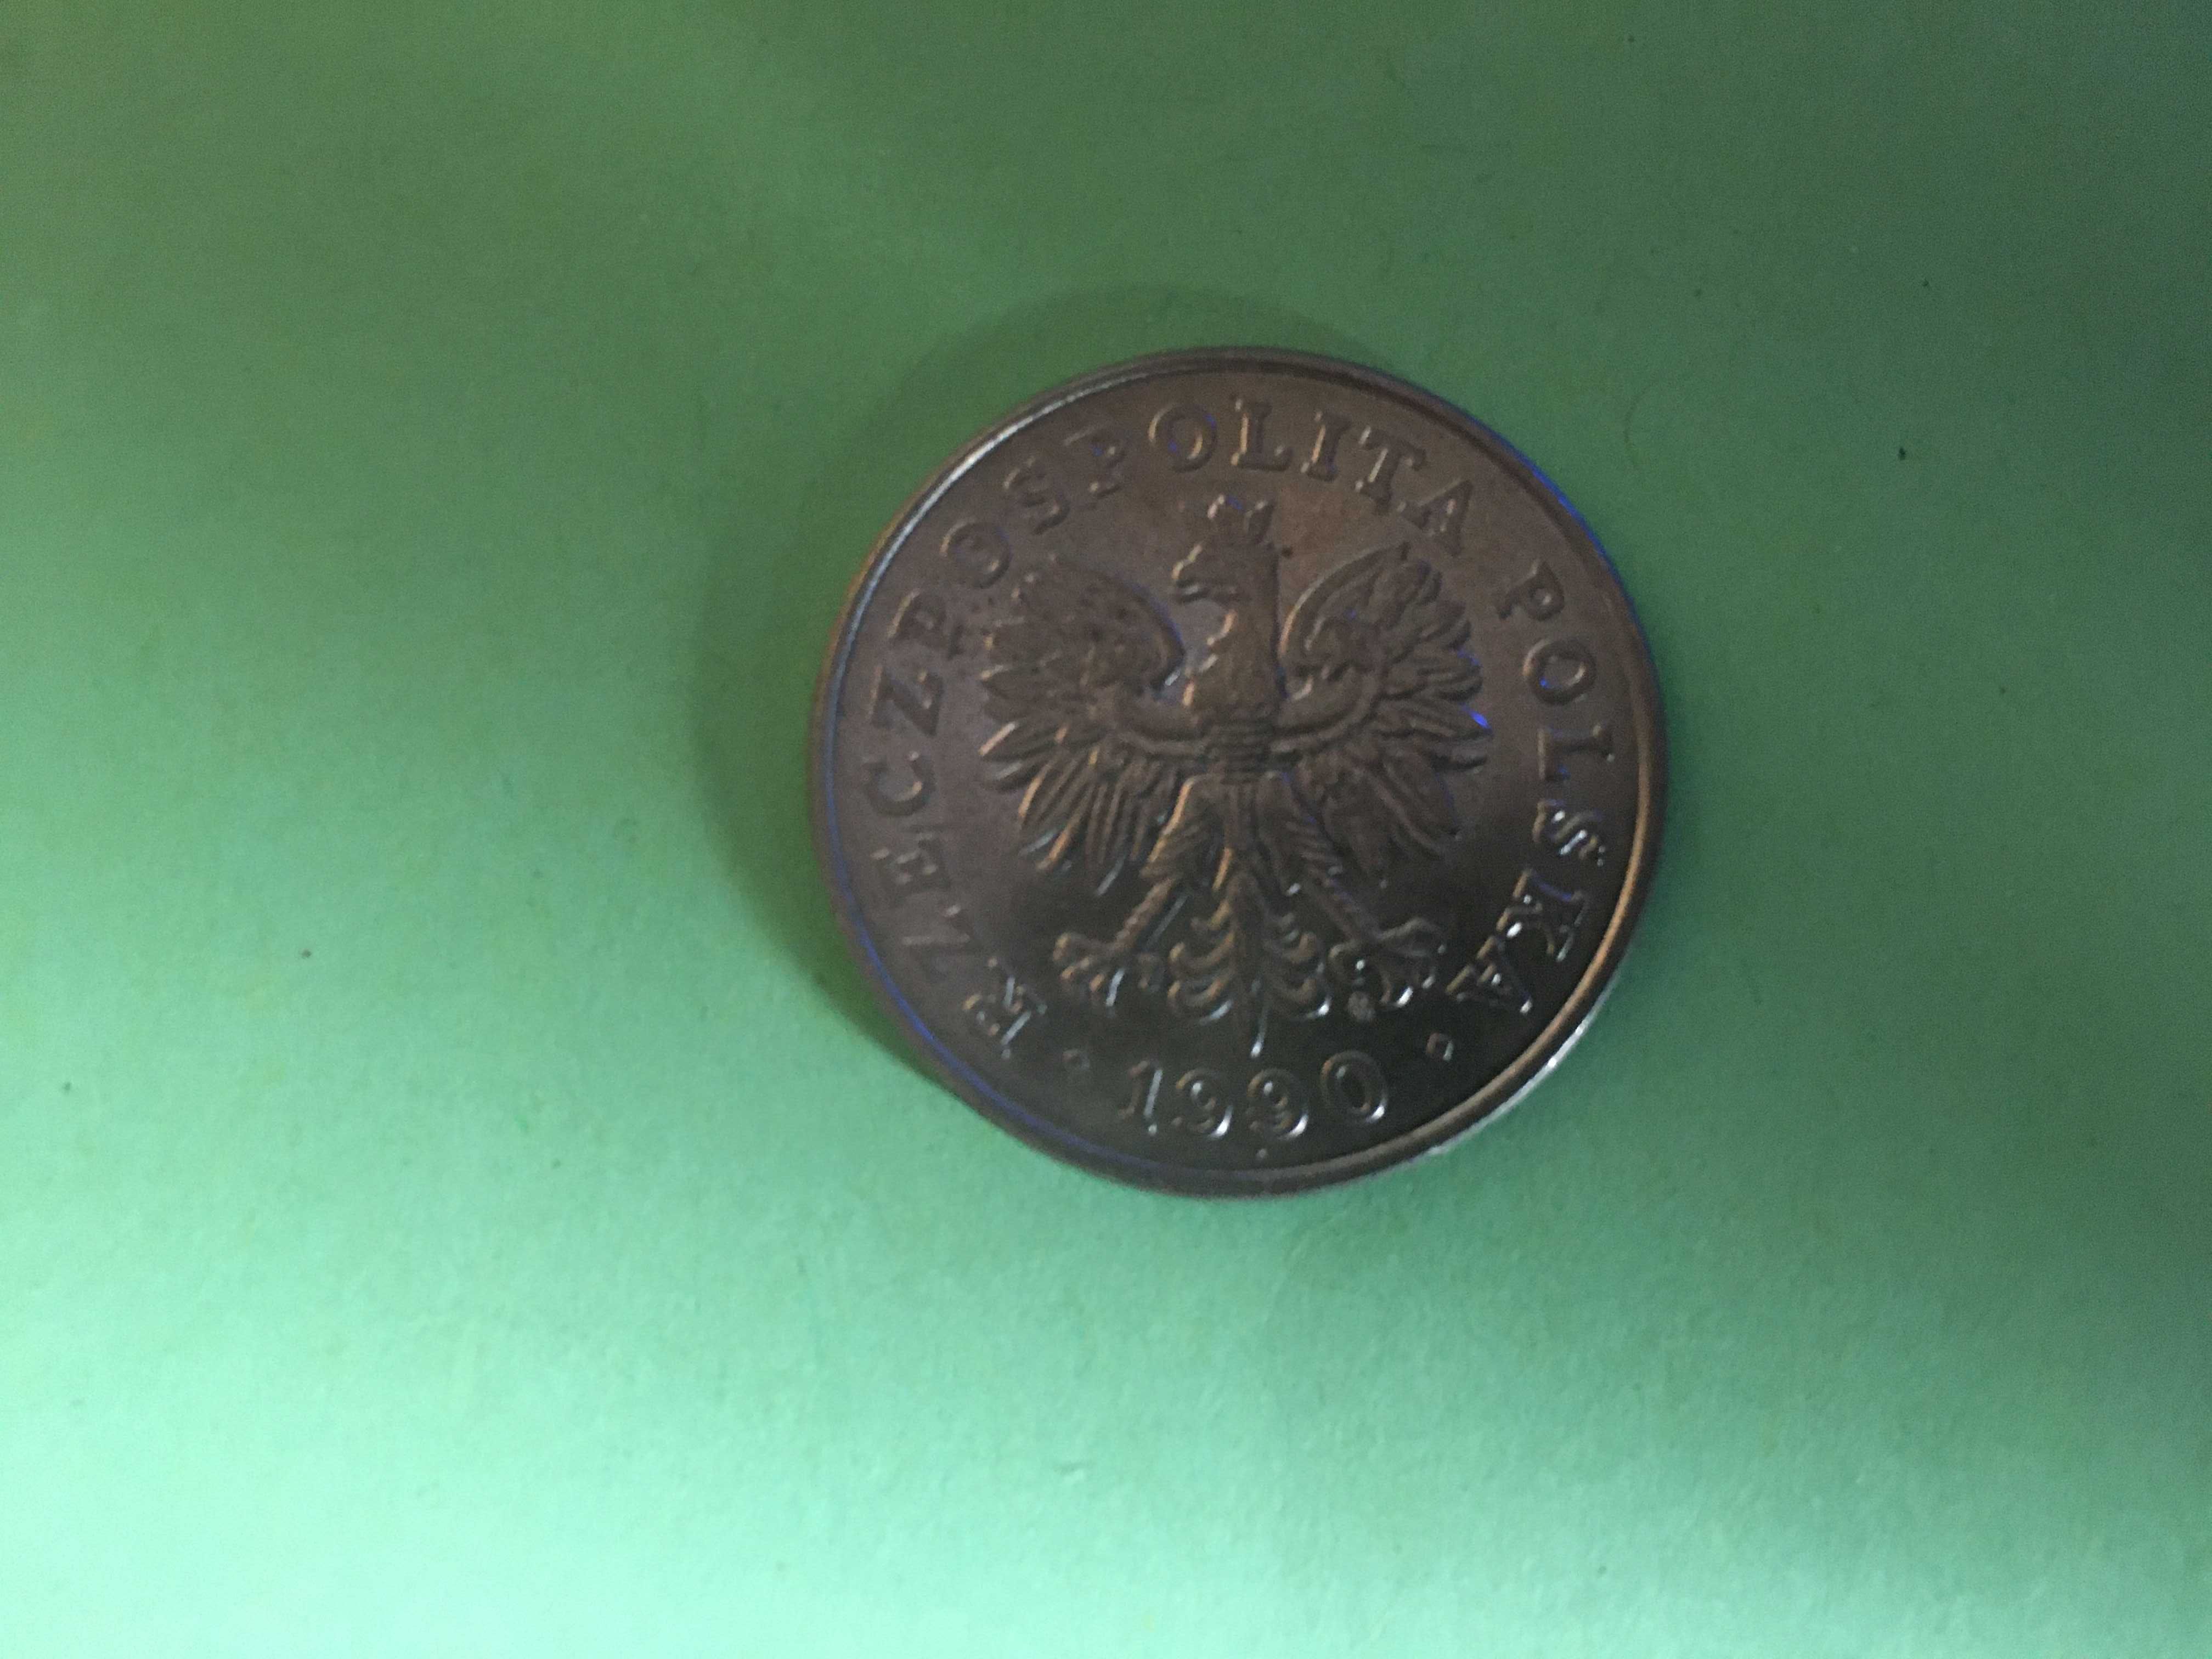 Moneta 100zł z koroną z 1990 roku